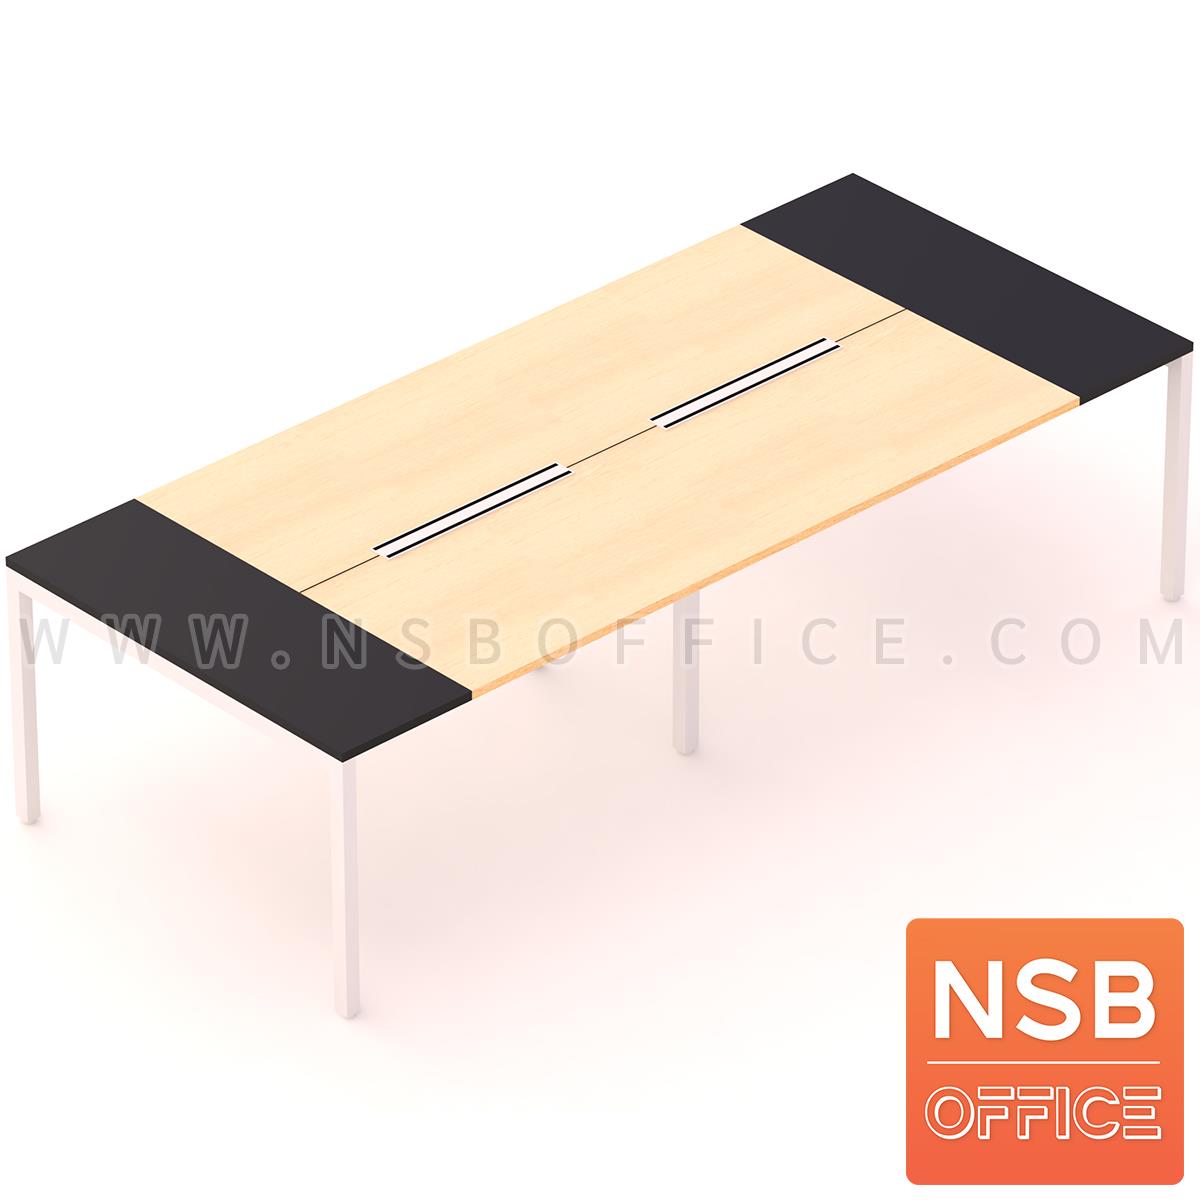 A05A175:โต๊ะประชุมทรงสี่เหลี่ยม 120D cm. รุ่น NSB-SQ12  พร้อมรางไฟแบบสองทาง รหัส A24A006